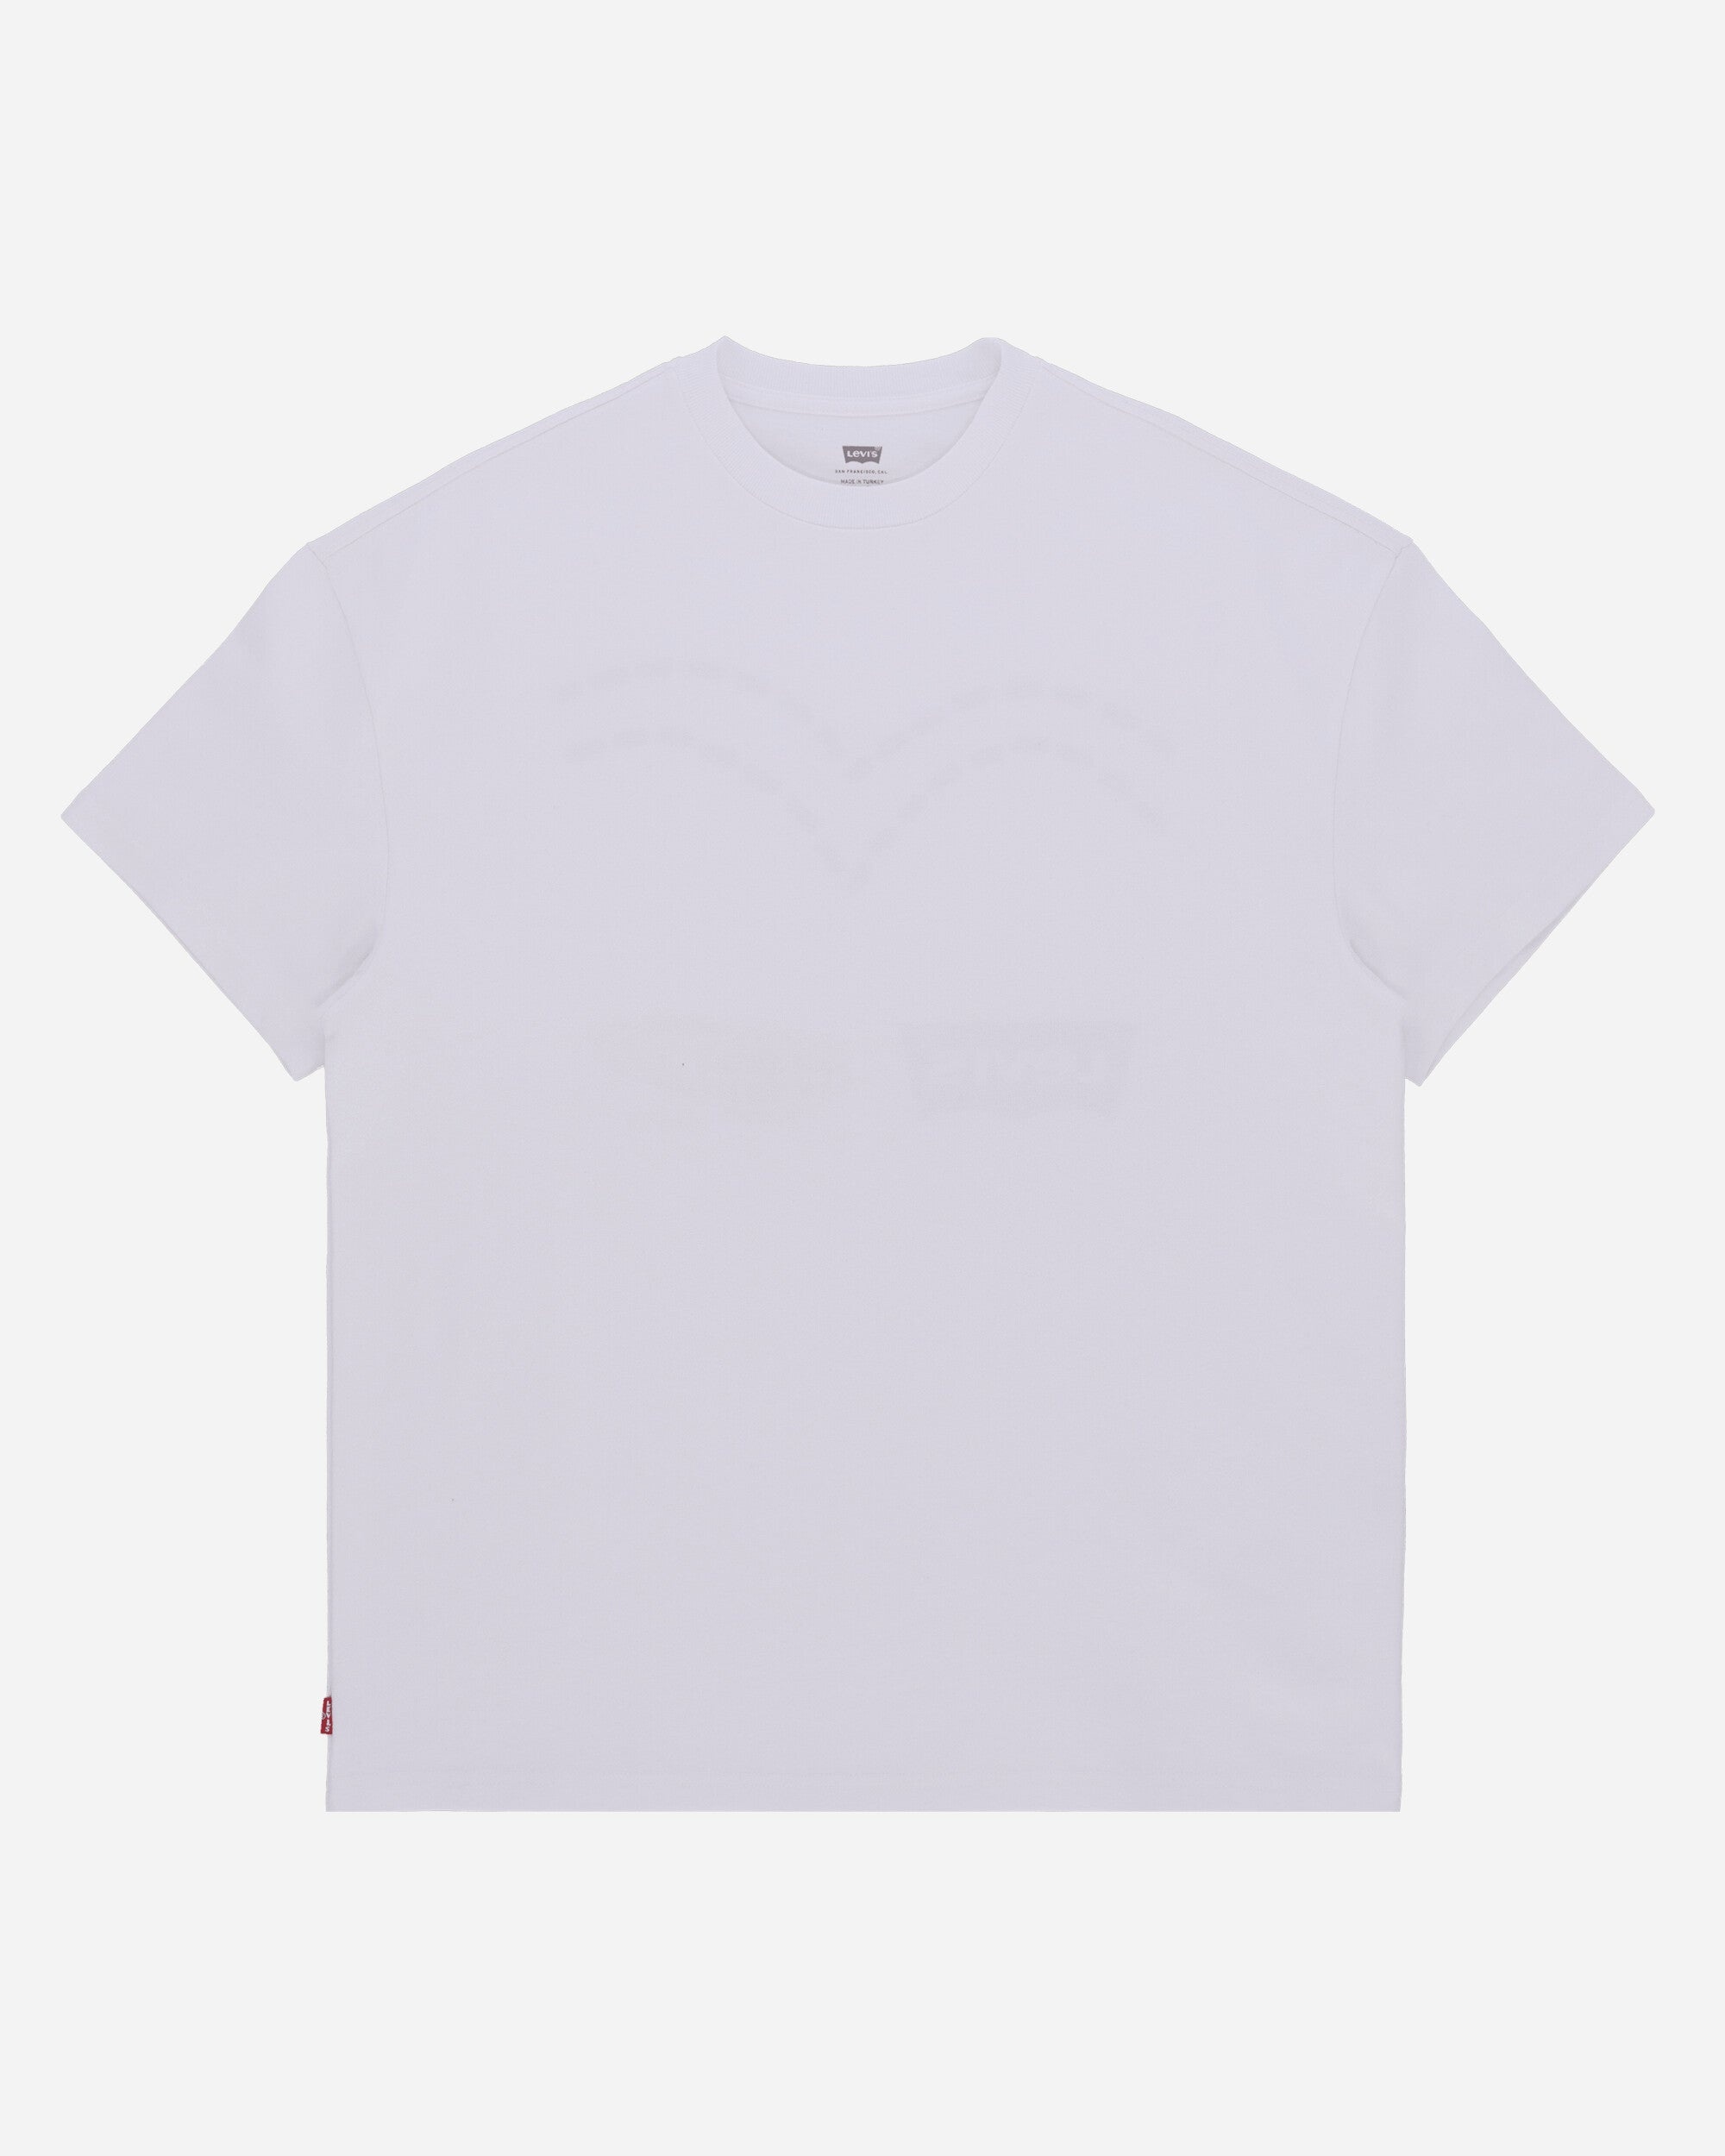 BEAMS Graphic T-Shirt White - 1